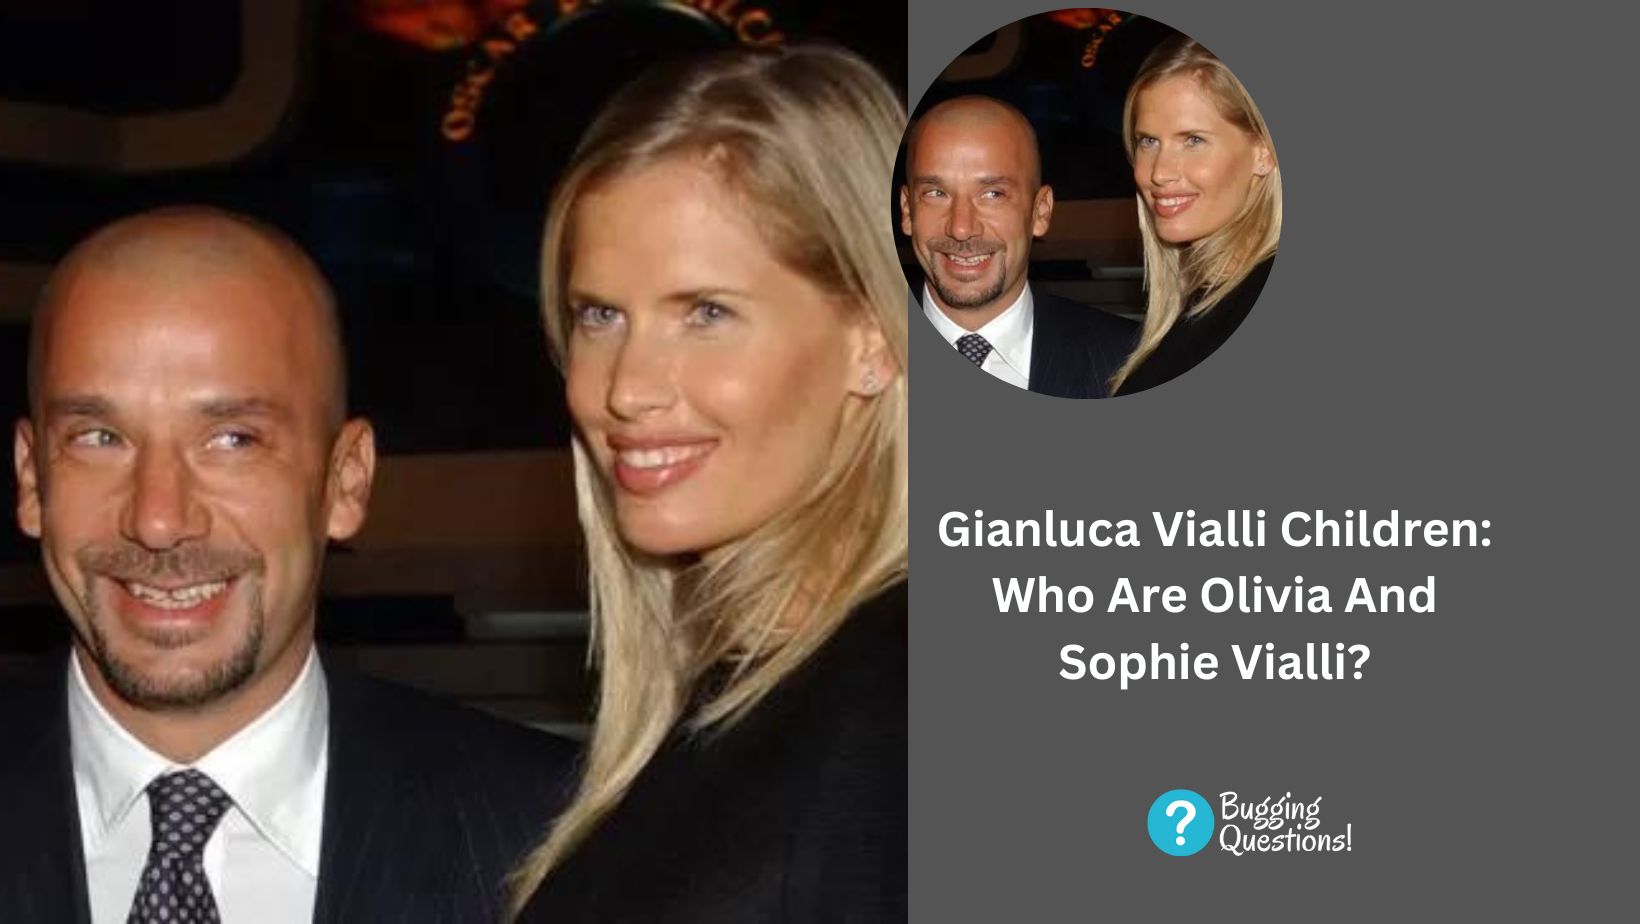 Gianluca Vialli Children: Who Are Olivia And Sophie Vialli?